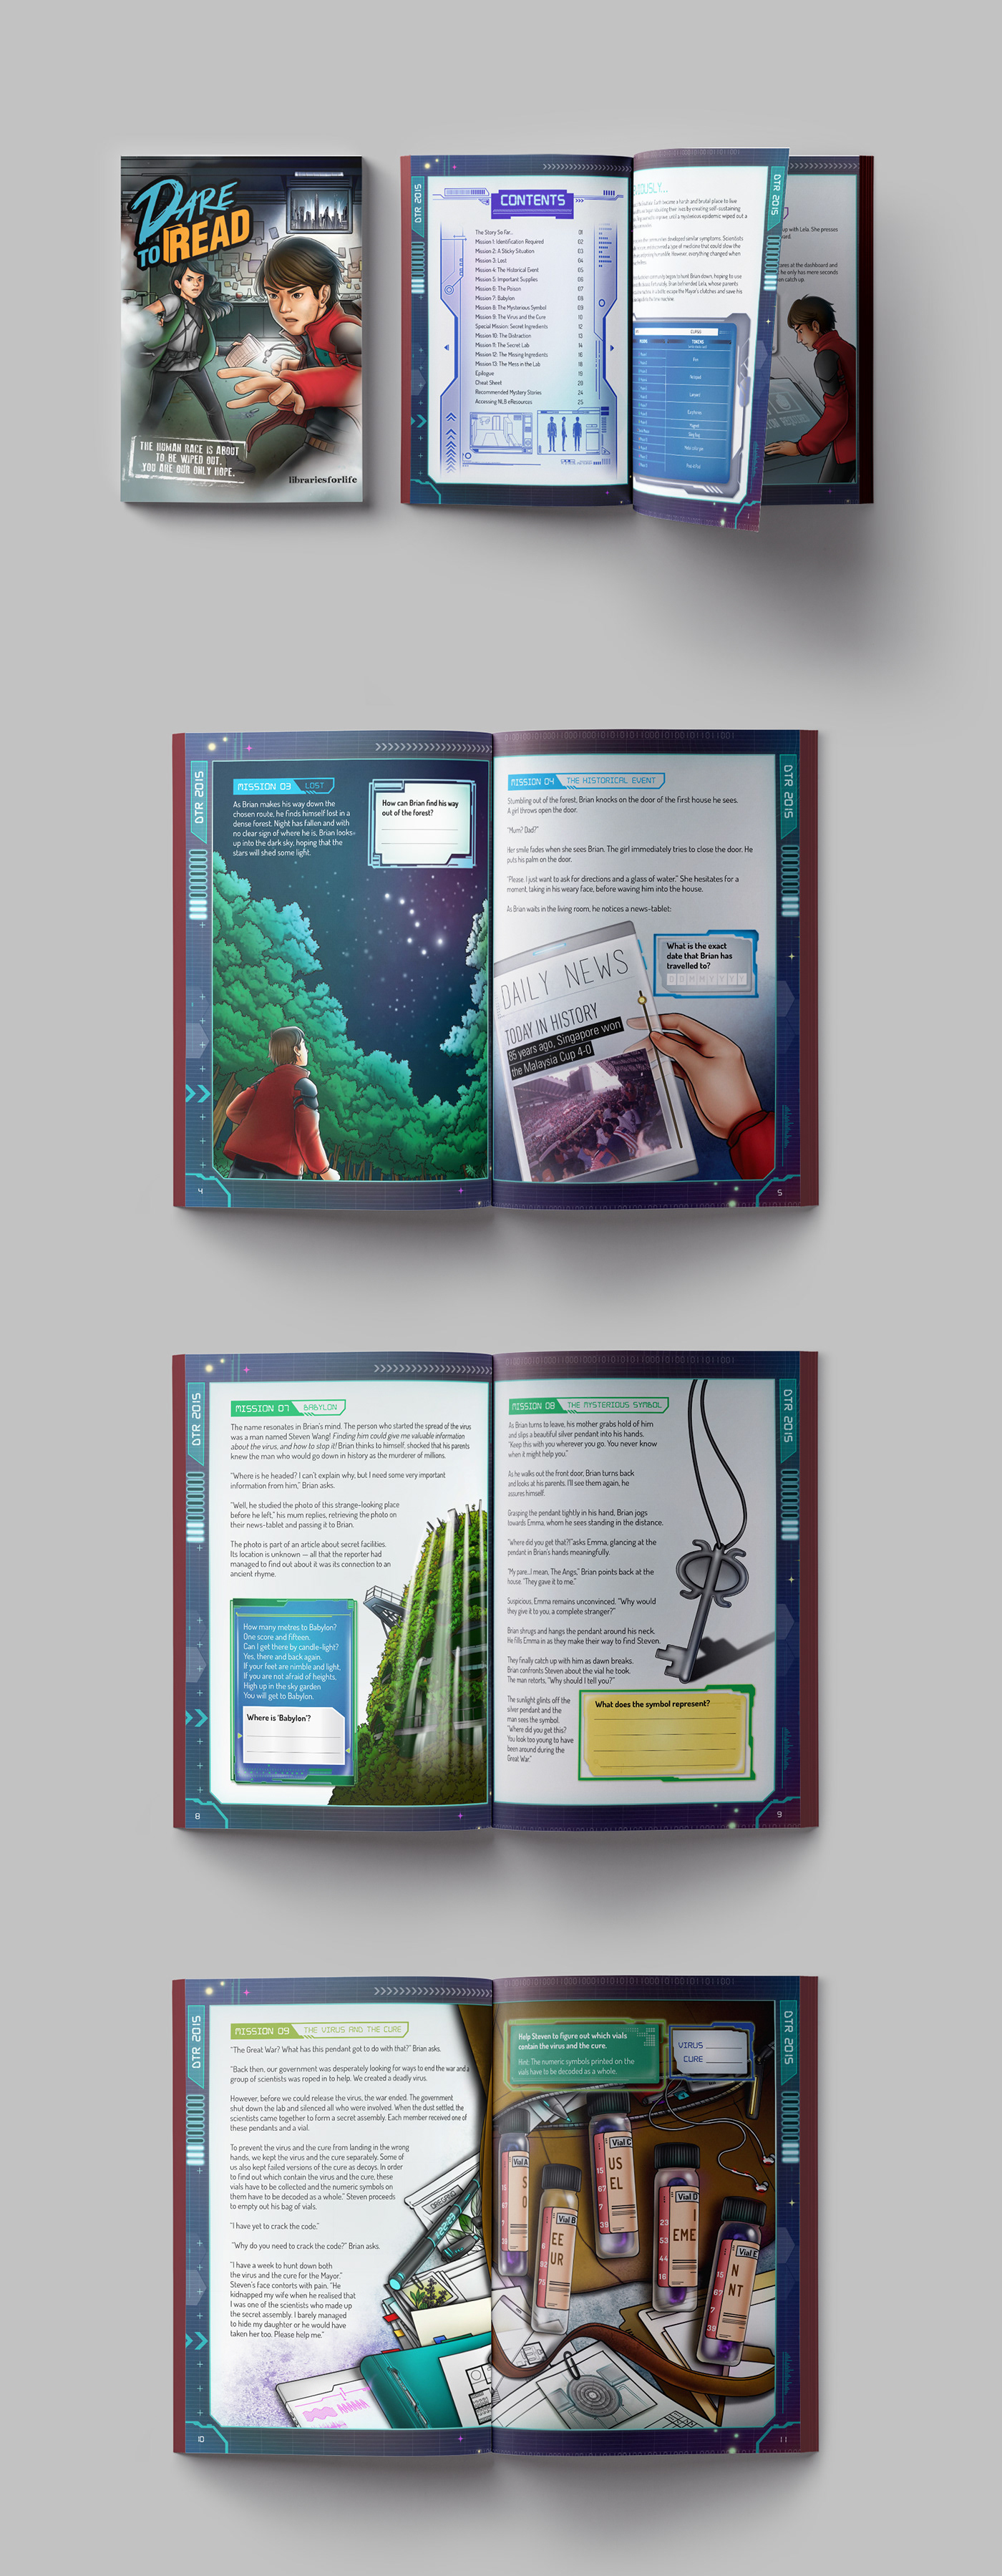 Dare to read National Library singapore primary school puzzle Quiz children book Horro Terror Booklet